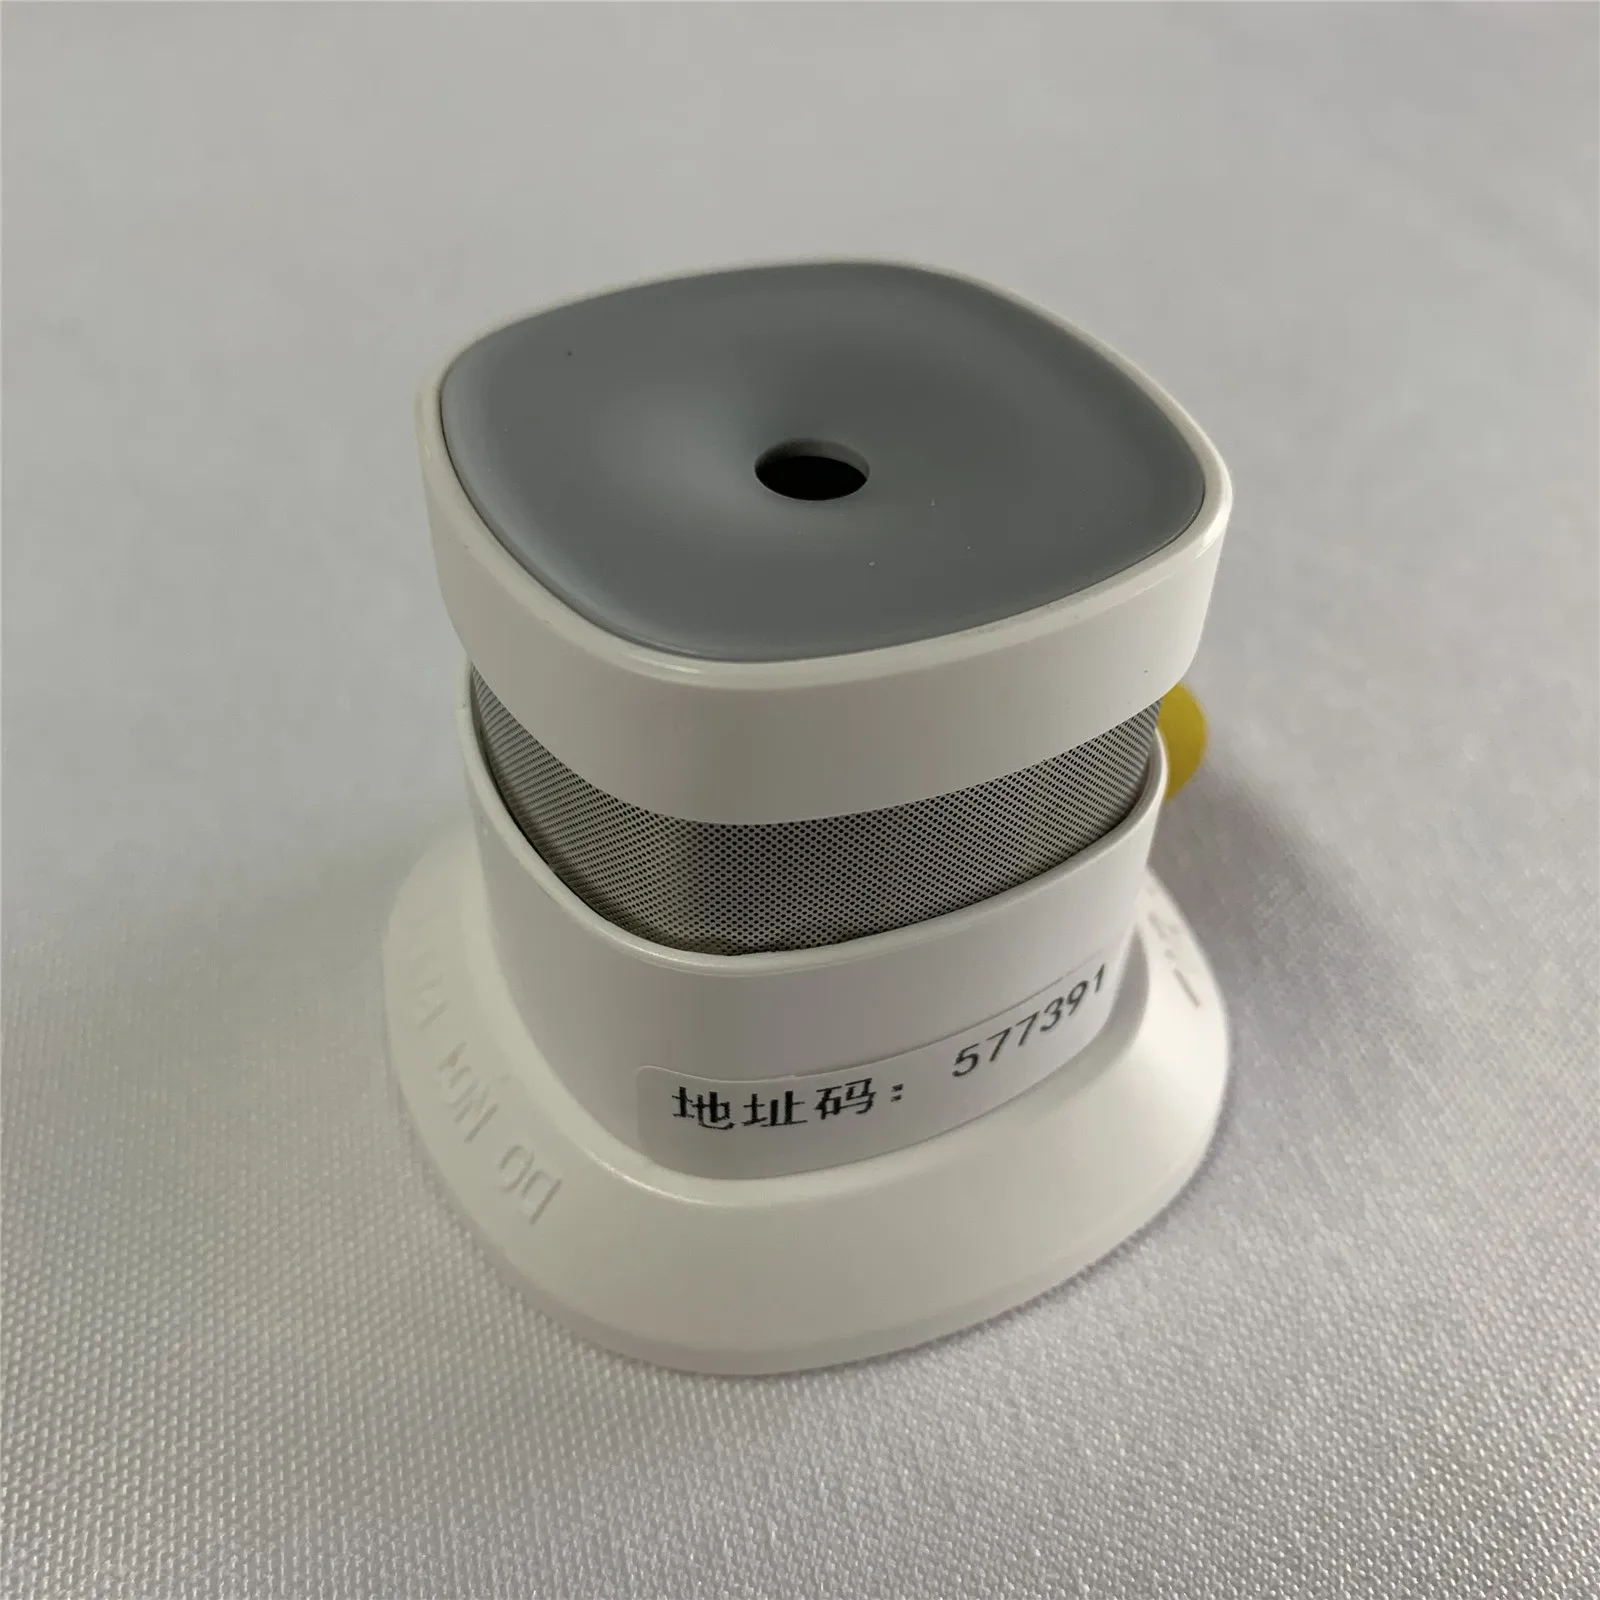 Fire alarm Smoke detector Smart Home system 2.4GHz High sensitivity 